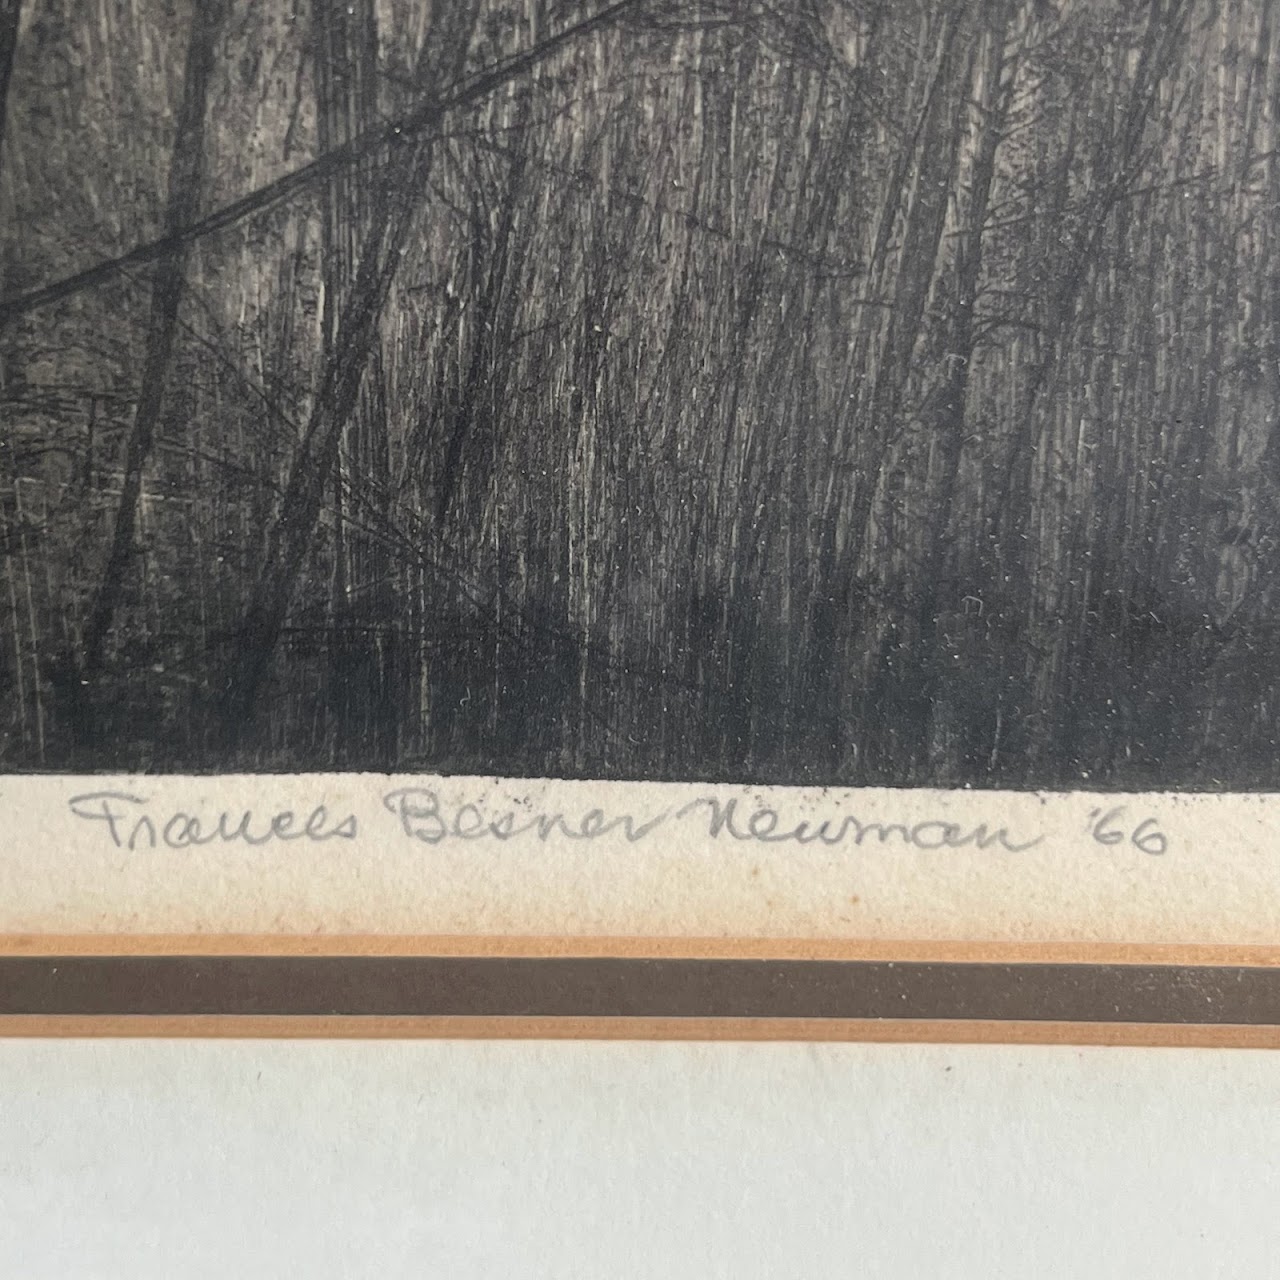 Frances Besner Newman Signed Etching